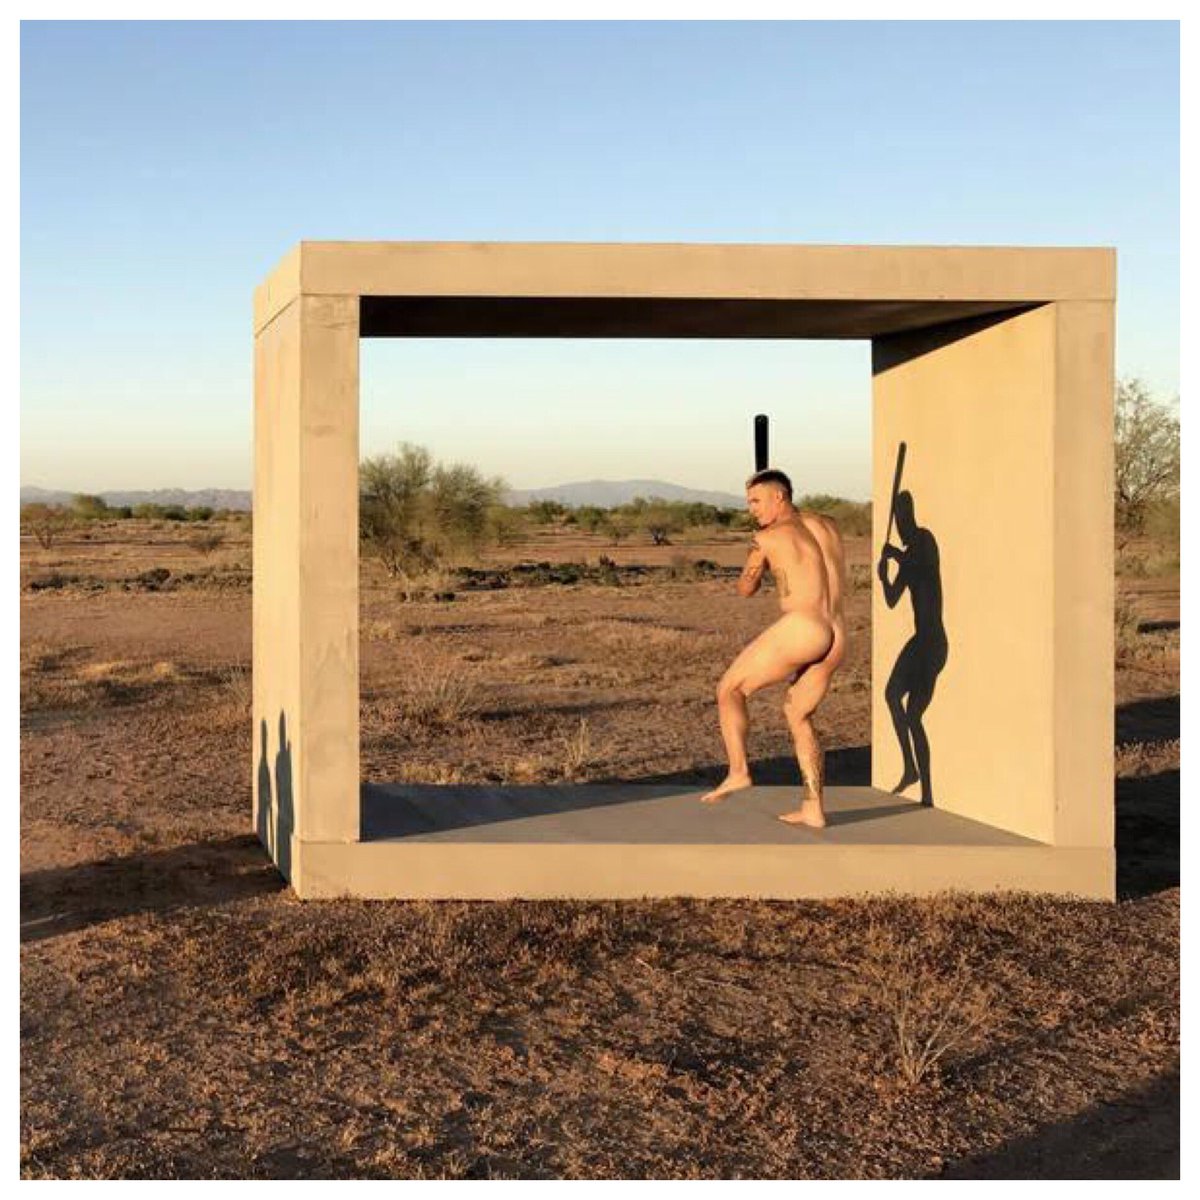 Javier Baez nude photo shoot for ESPN magazine. 